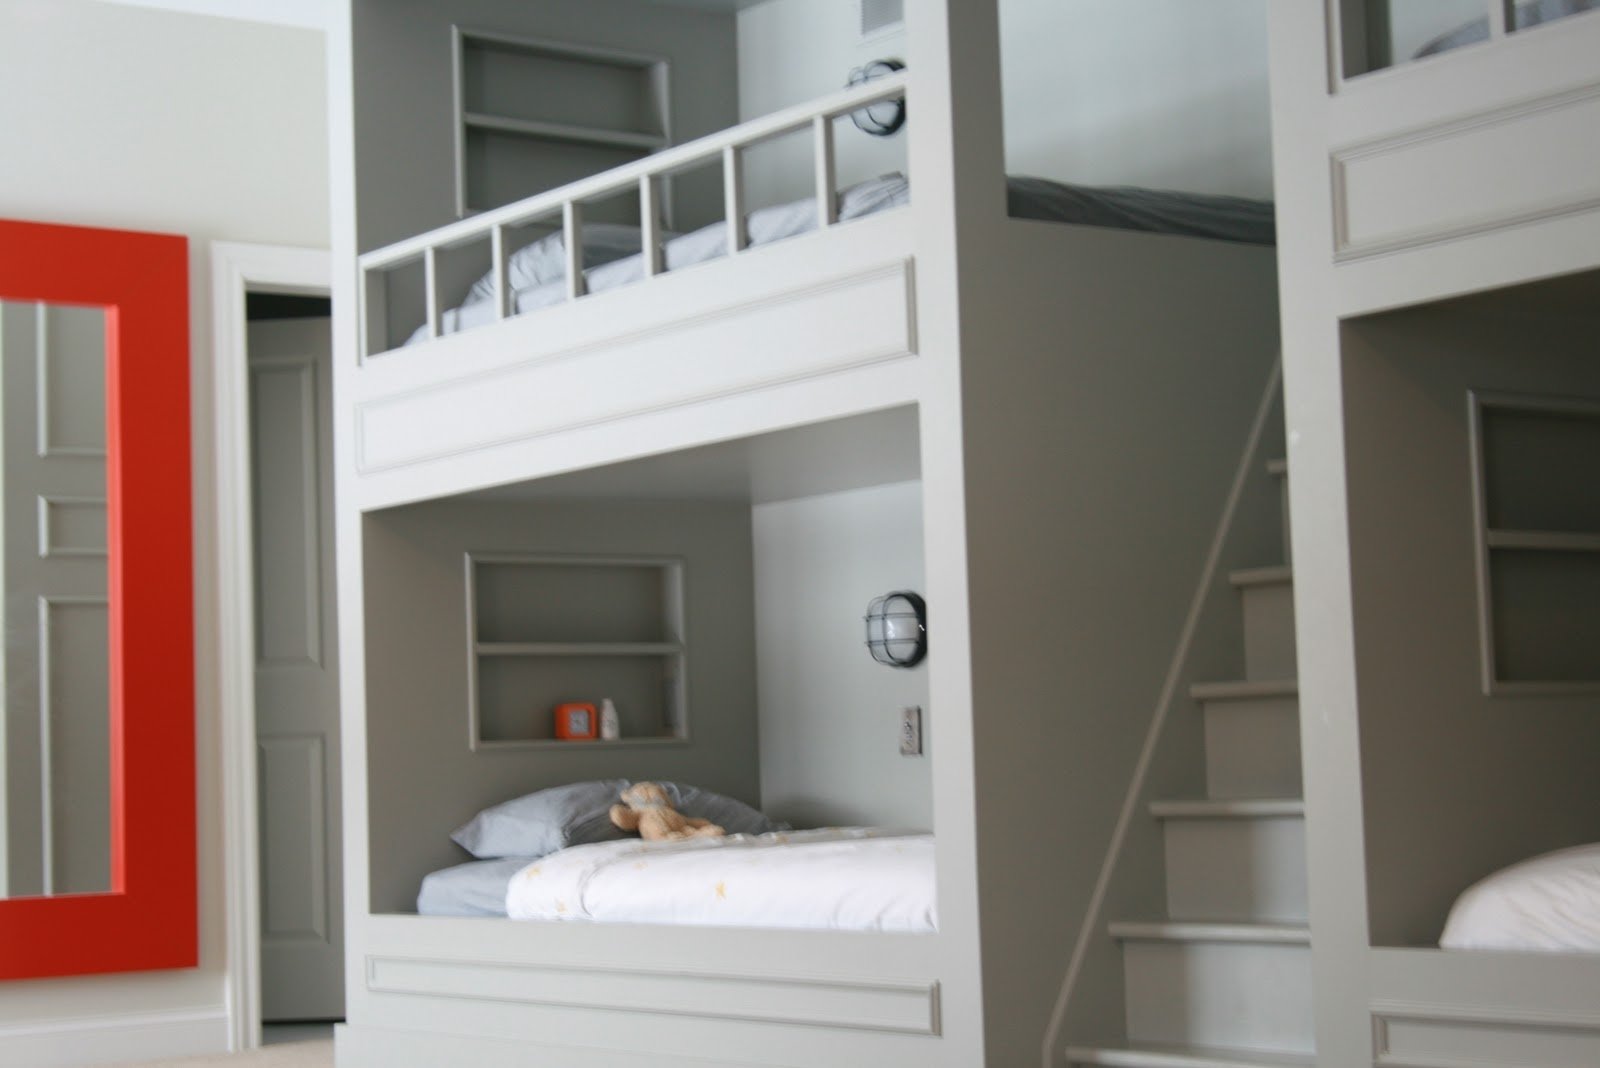 10 Elegant Built In Bunk Bed Ideas built bunk beds plans bed diy blueprints tierra este 48302 2023